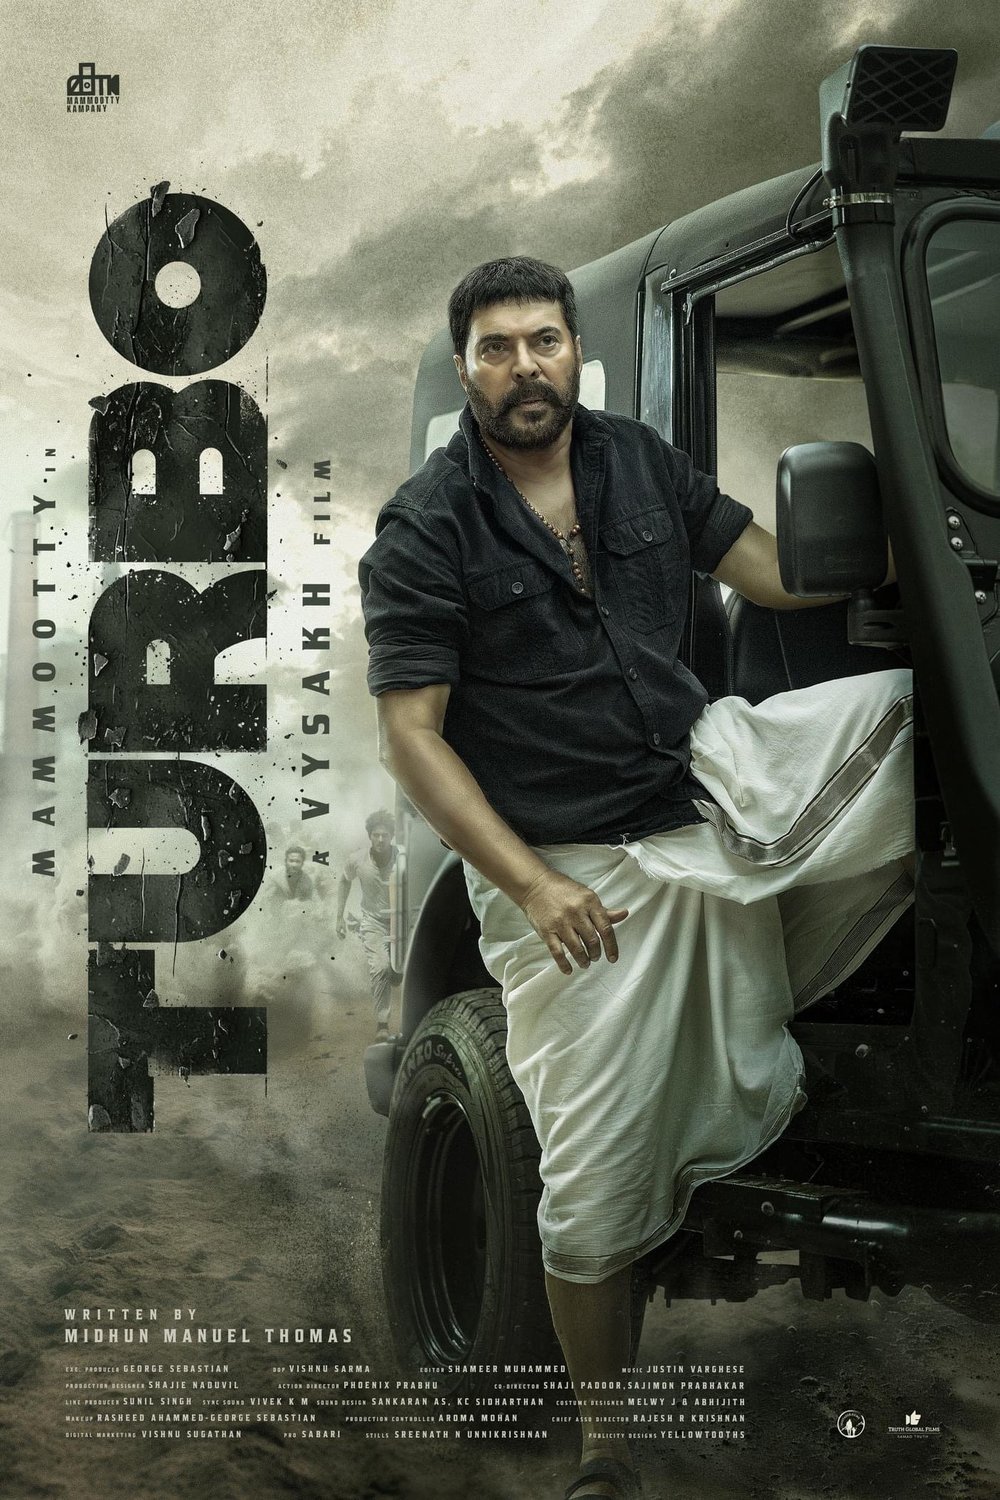 Malayalam poster of the movie Turbo